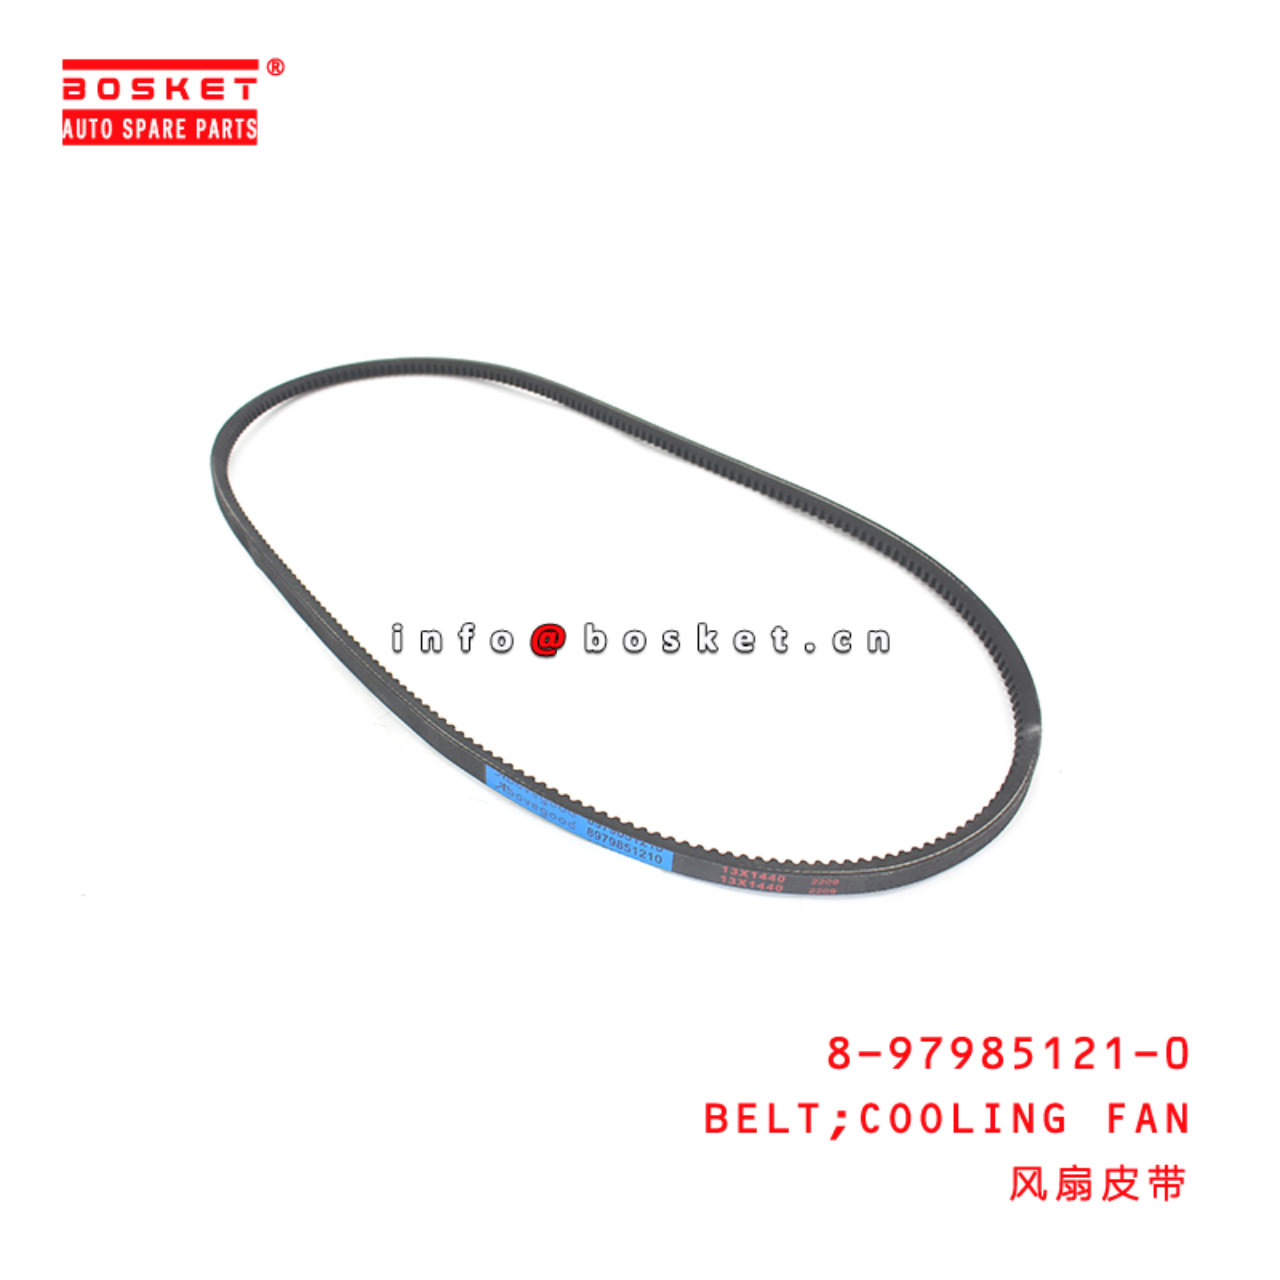 8-97985121-0 Cooling Fan Belt Suitable for ISUZU DMAX 4JA1 8979851210